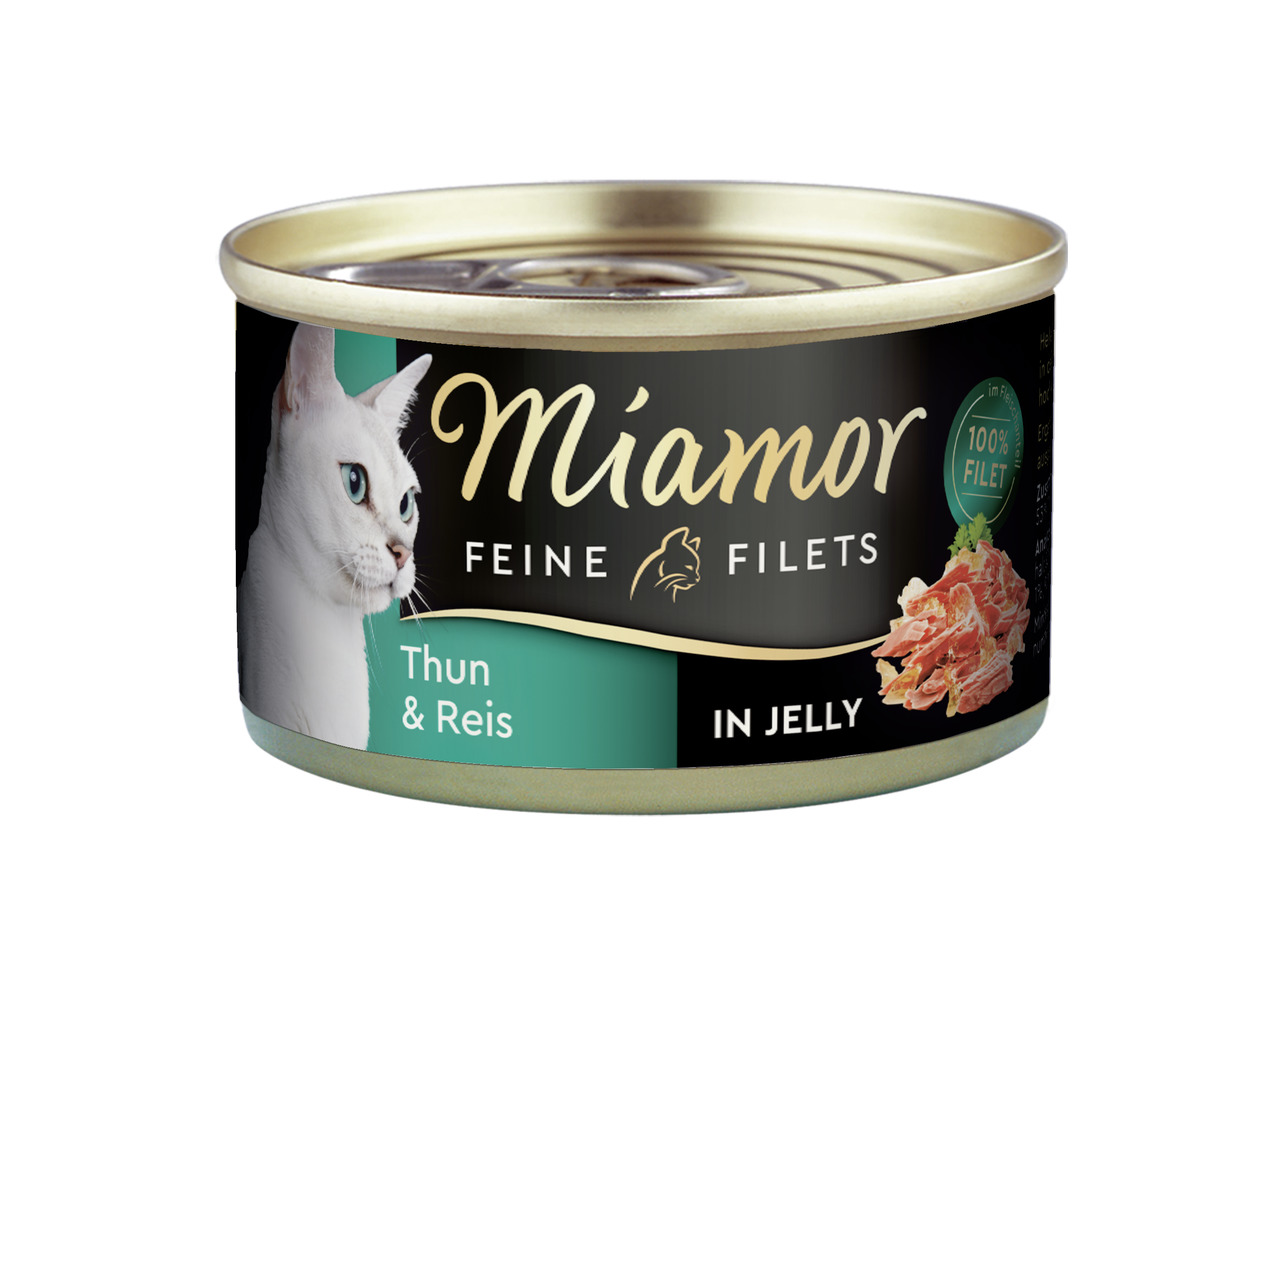 Miamor Feine Filets in Jelly Thun & Reis Katzen Nassfutter 100 g